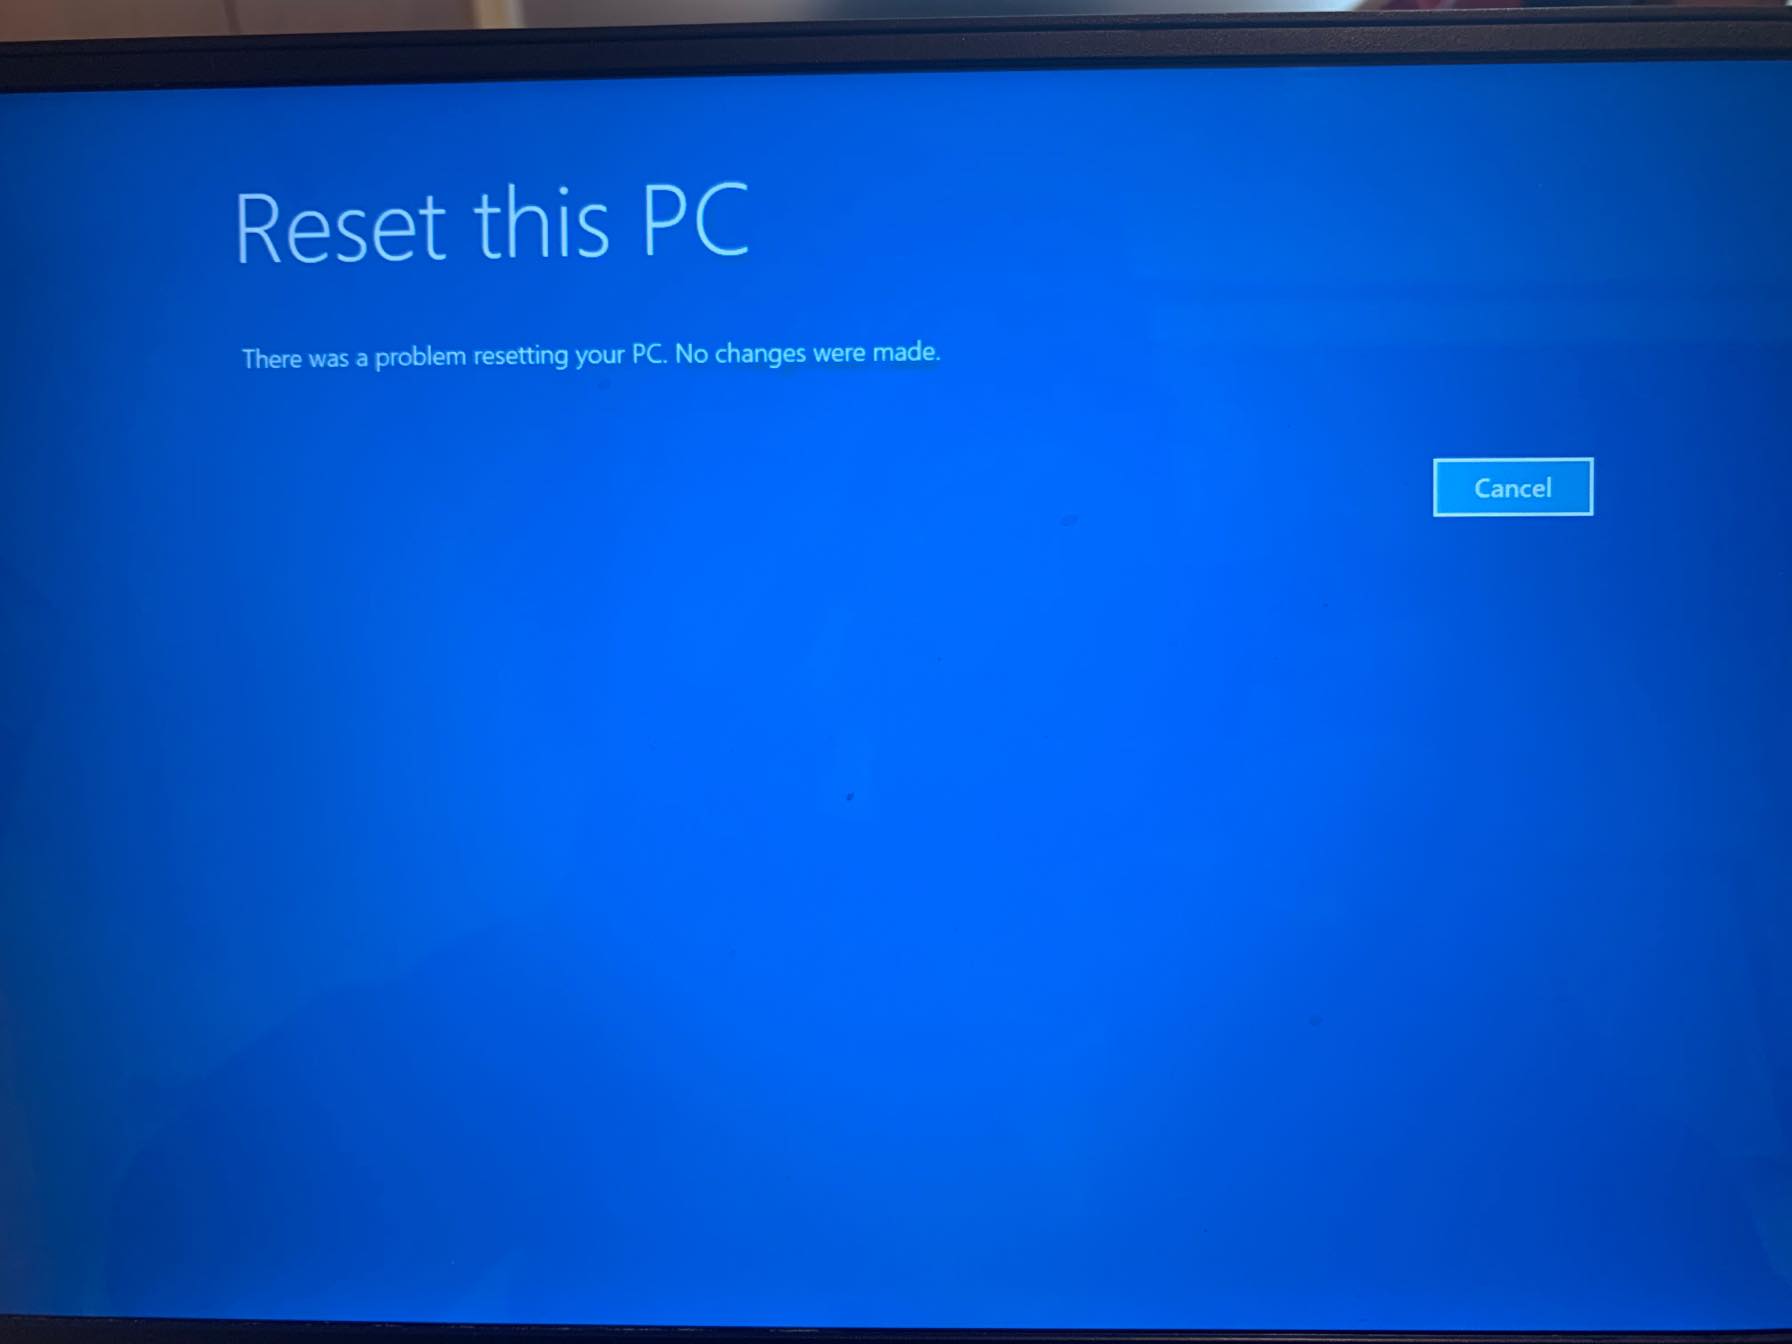 unable to reset pc windows 10